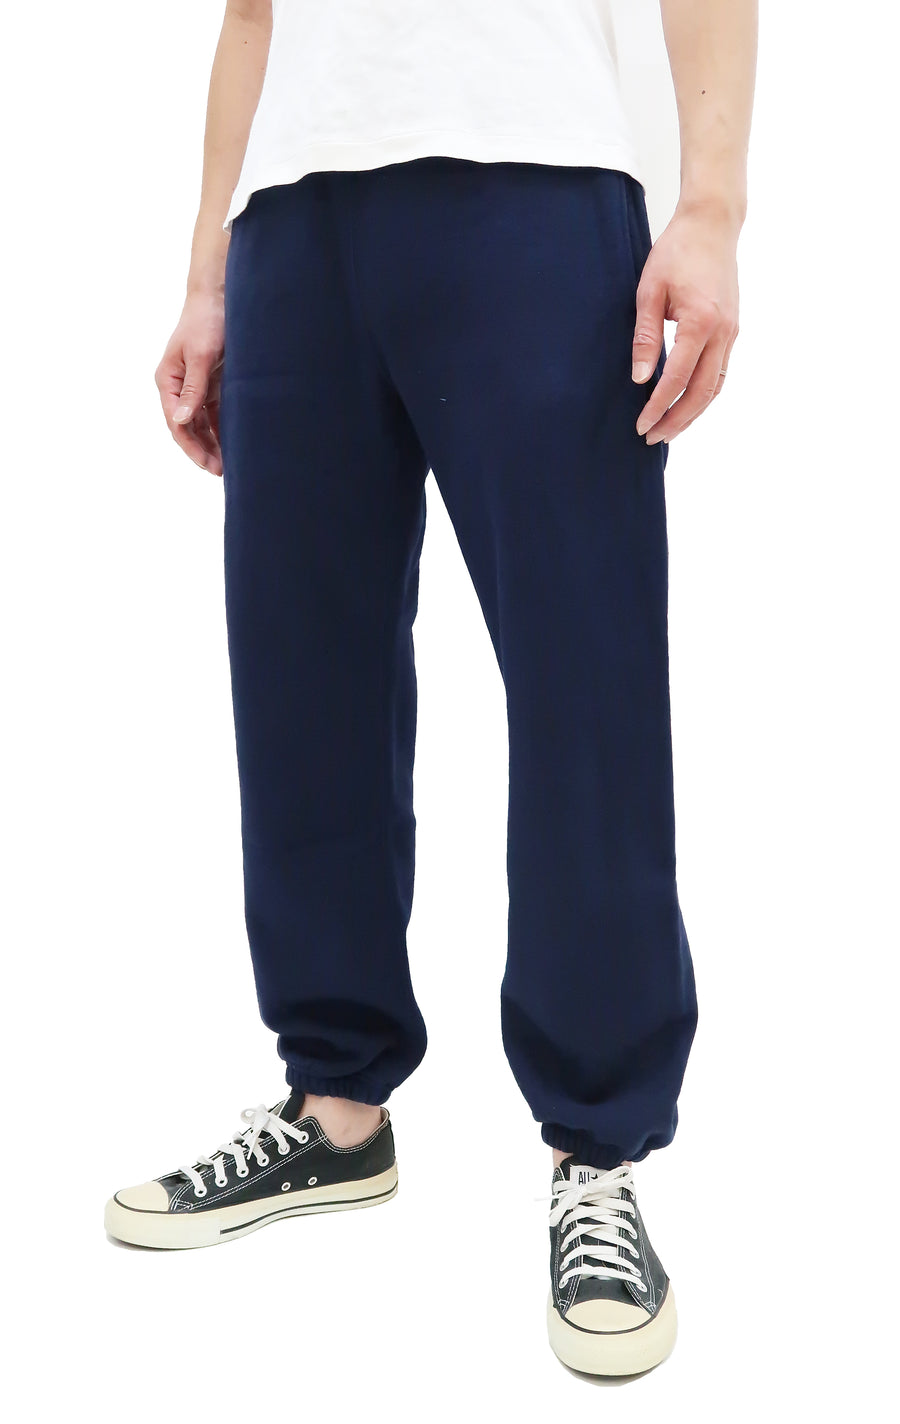 Whitesville Sweatpants Men's Drawstring Waist Sweatpants with Elastic Cuff WV49036 128 Navy-Blue